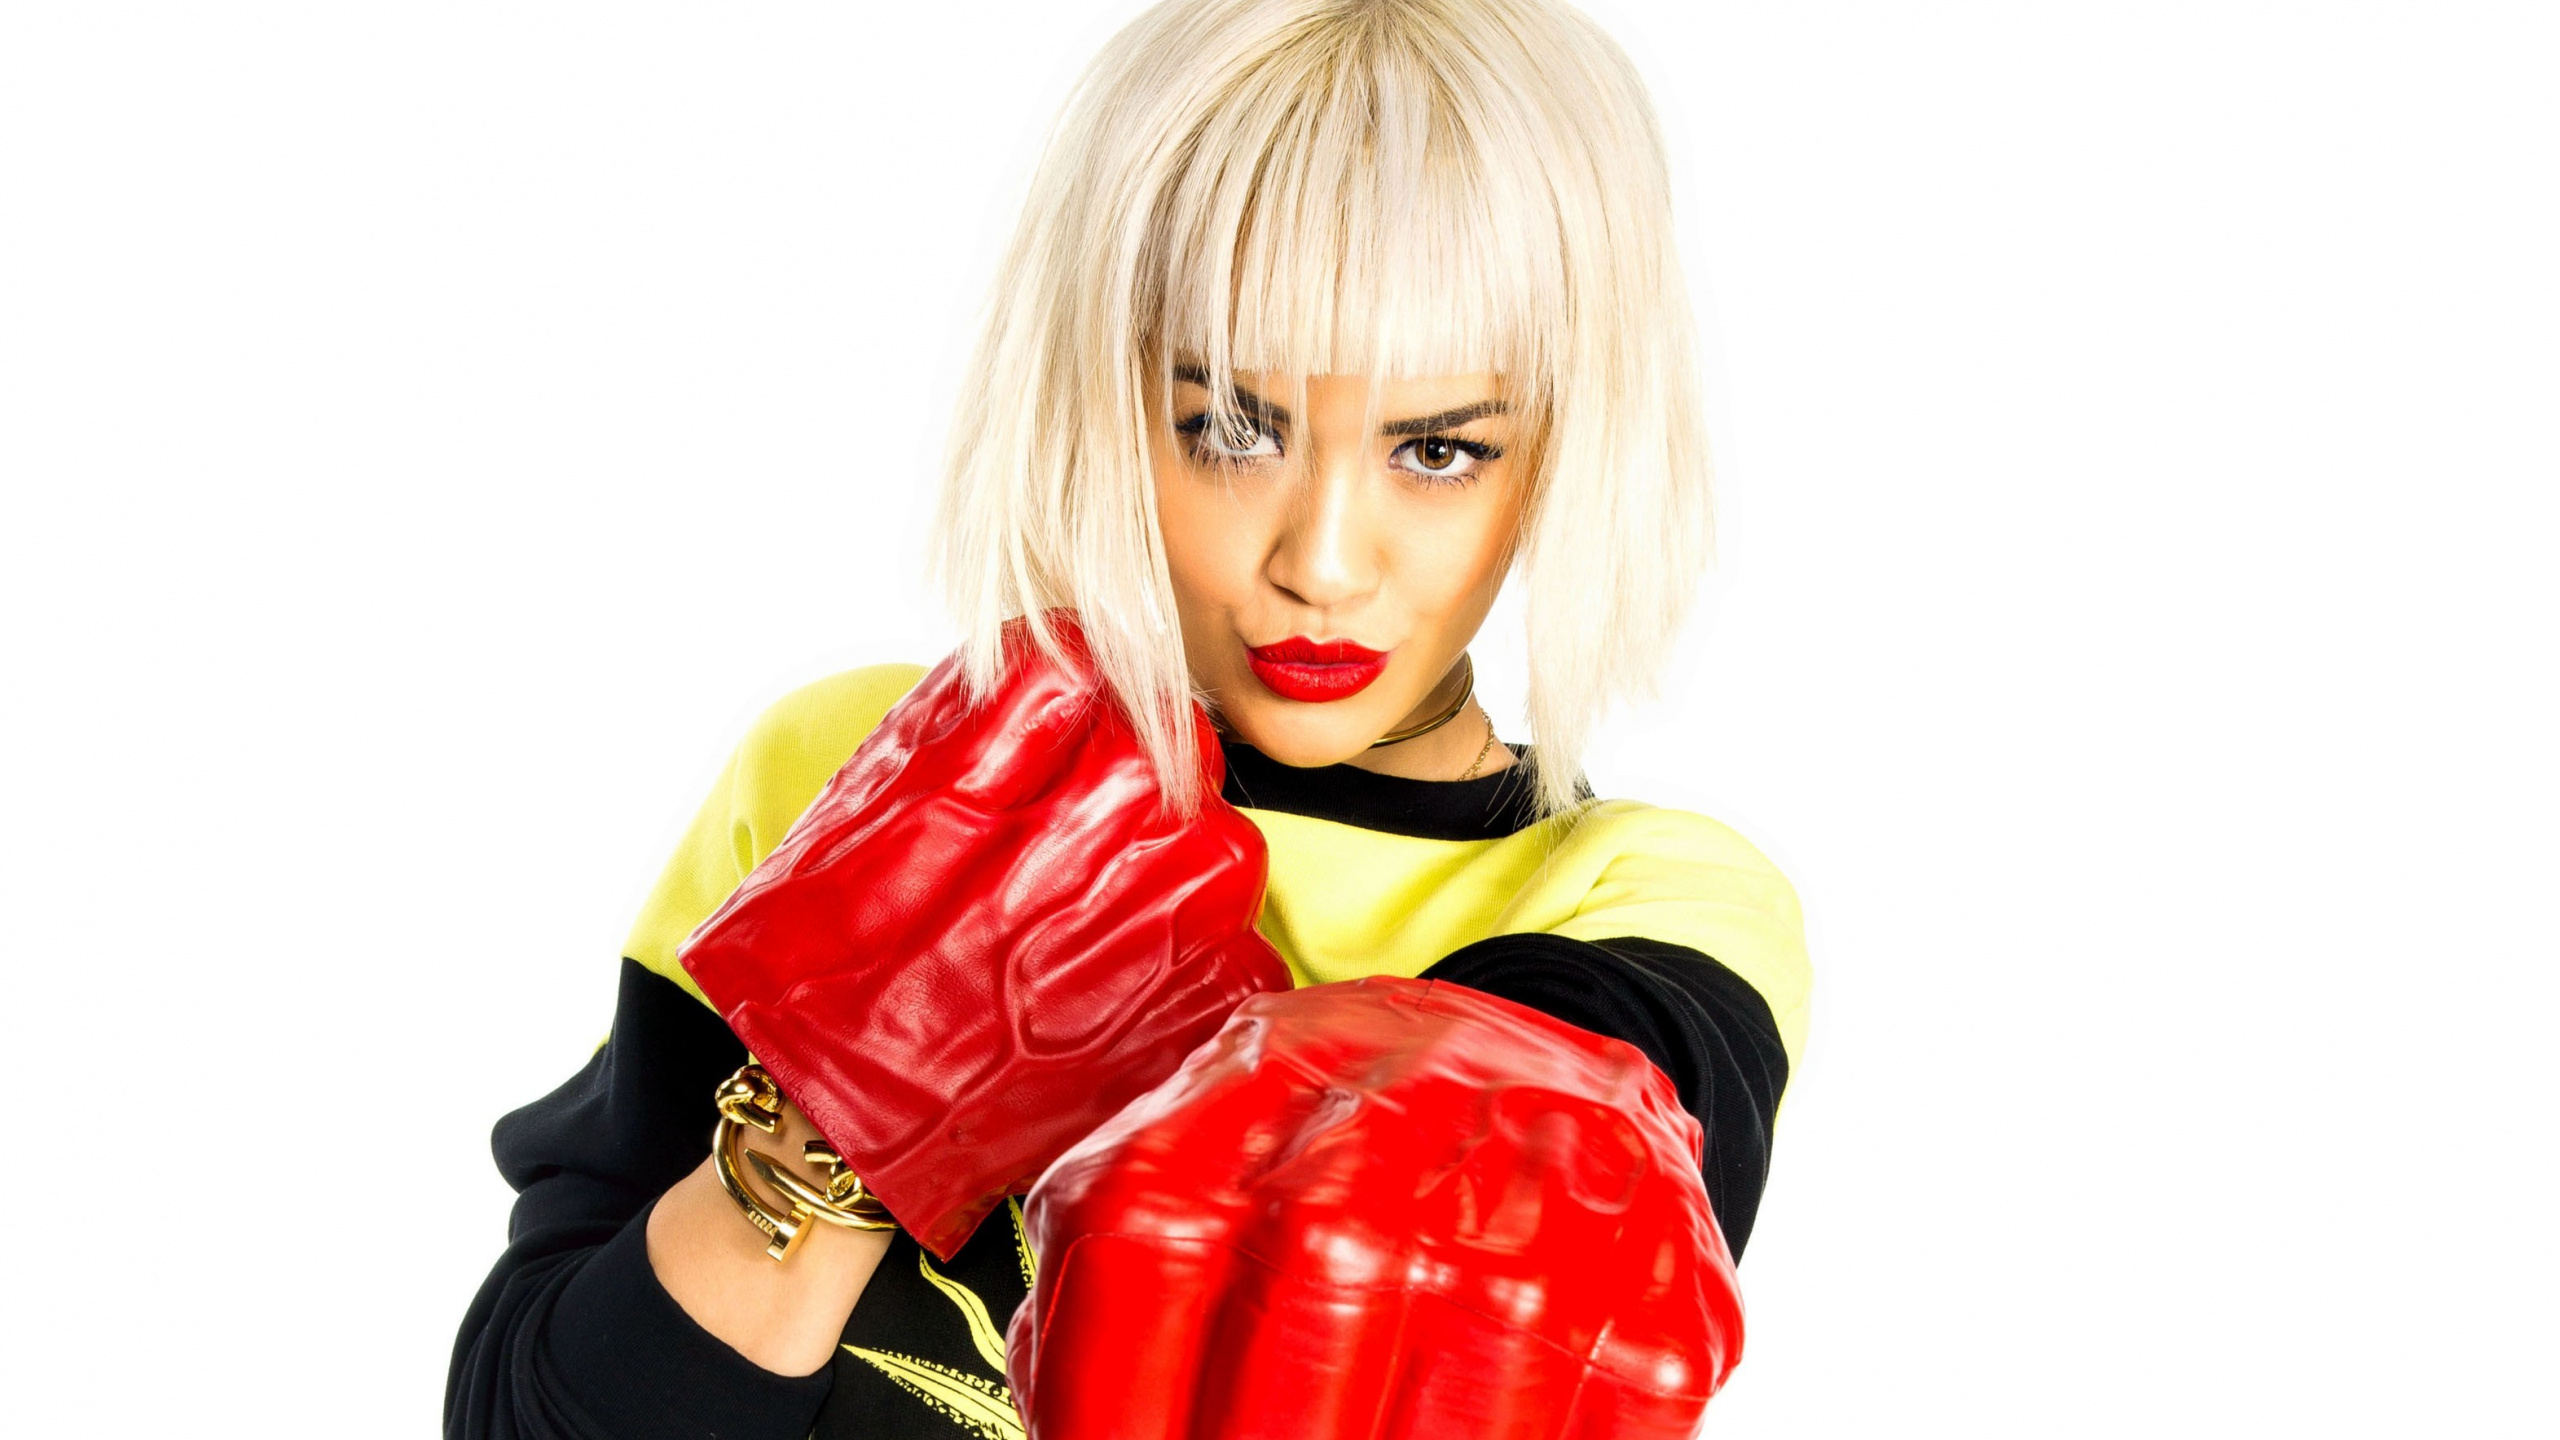 Glove, Rita Ora, Boxing Glove, Red, Boxing Equipment. Wallpaper in 2560x1440 Resolution